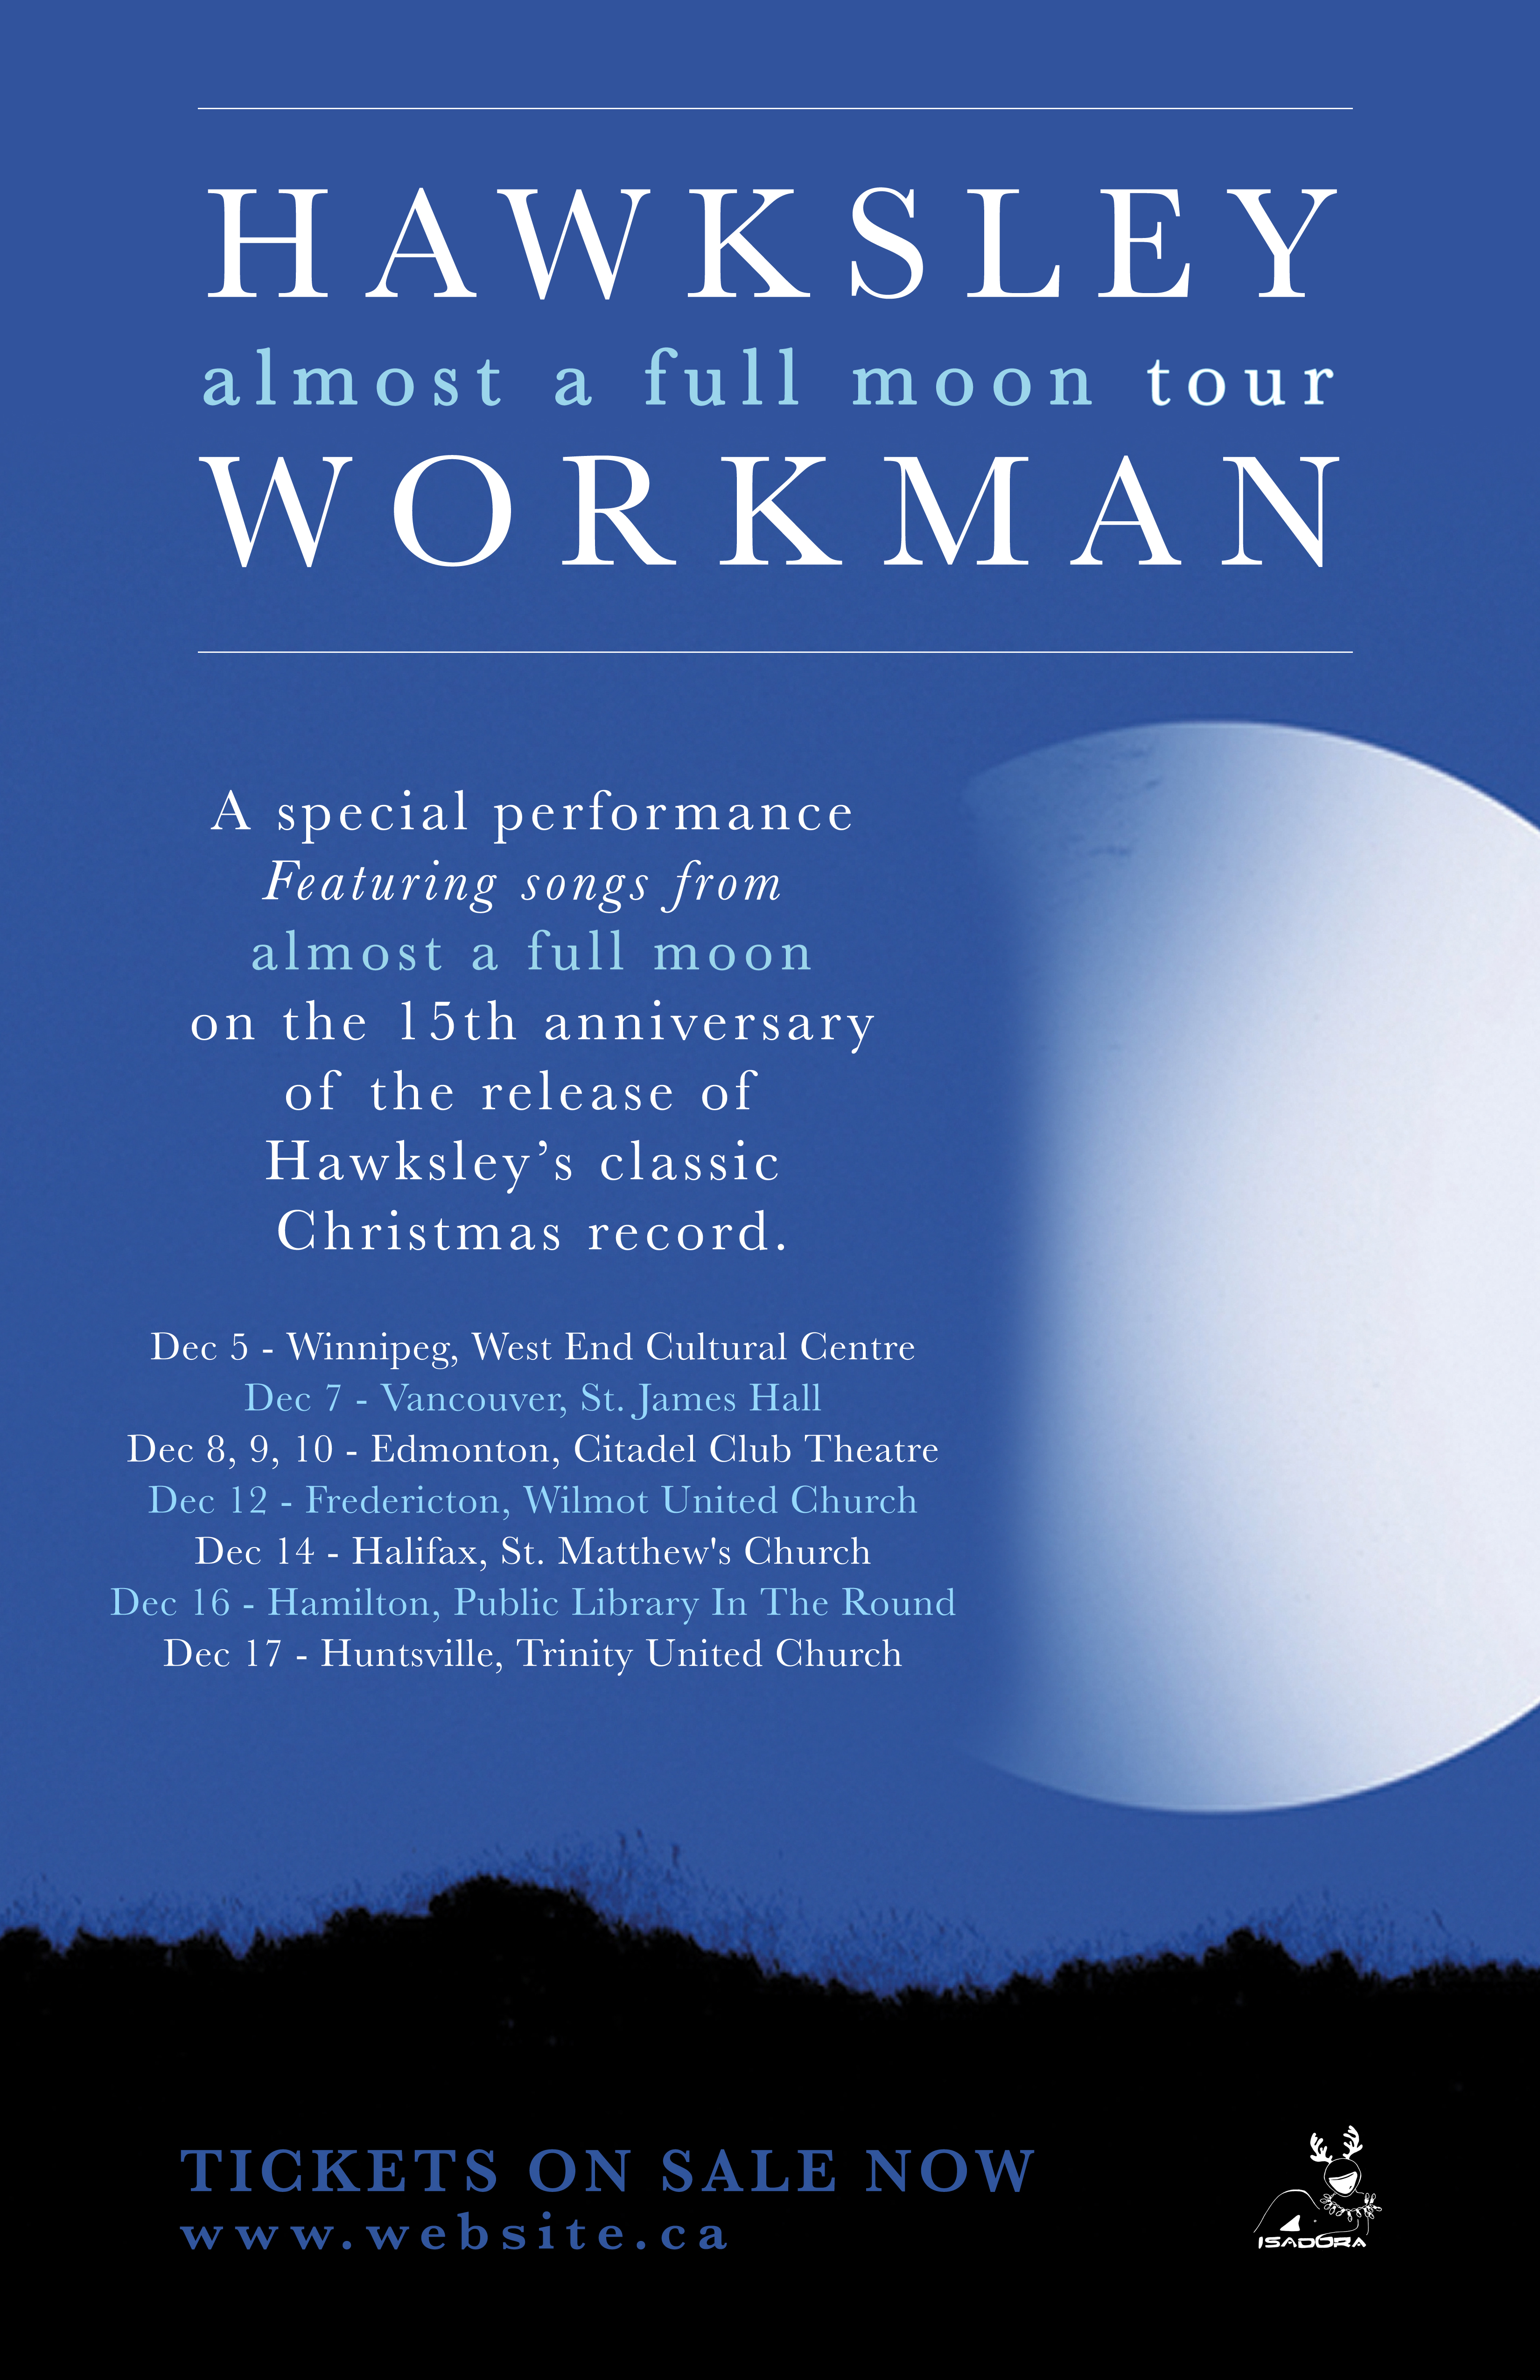 hawksley workman tour dates